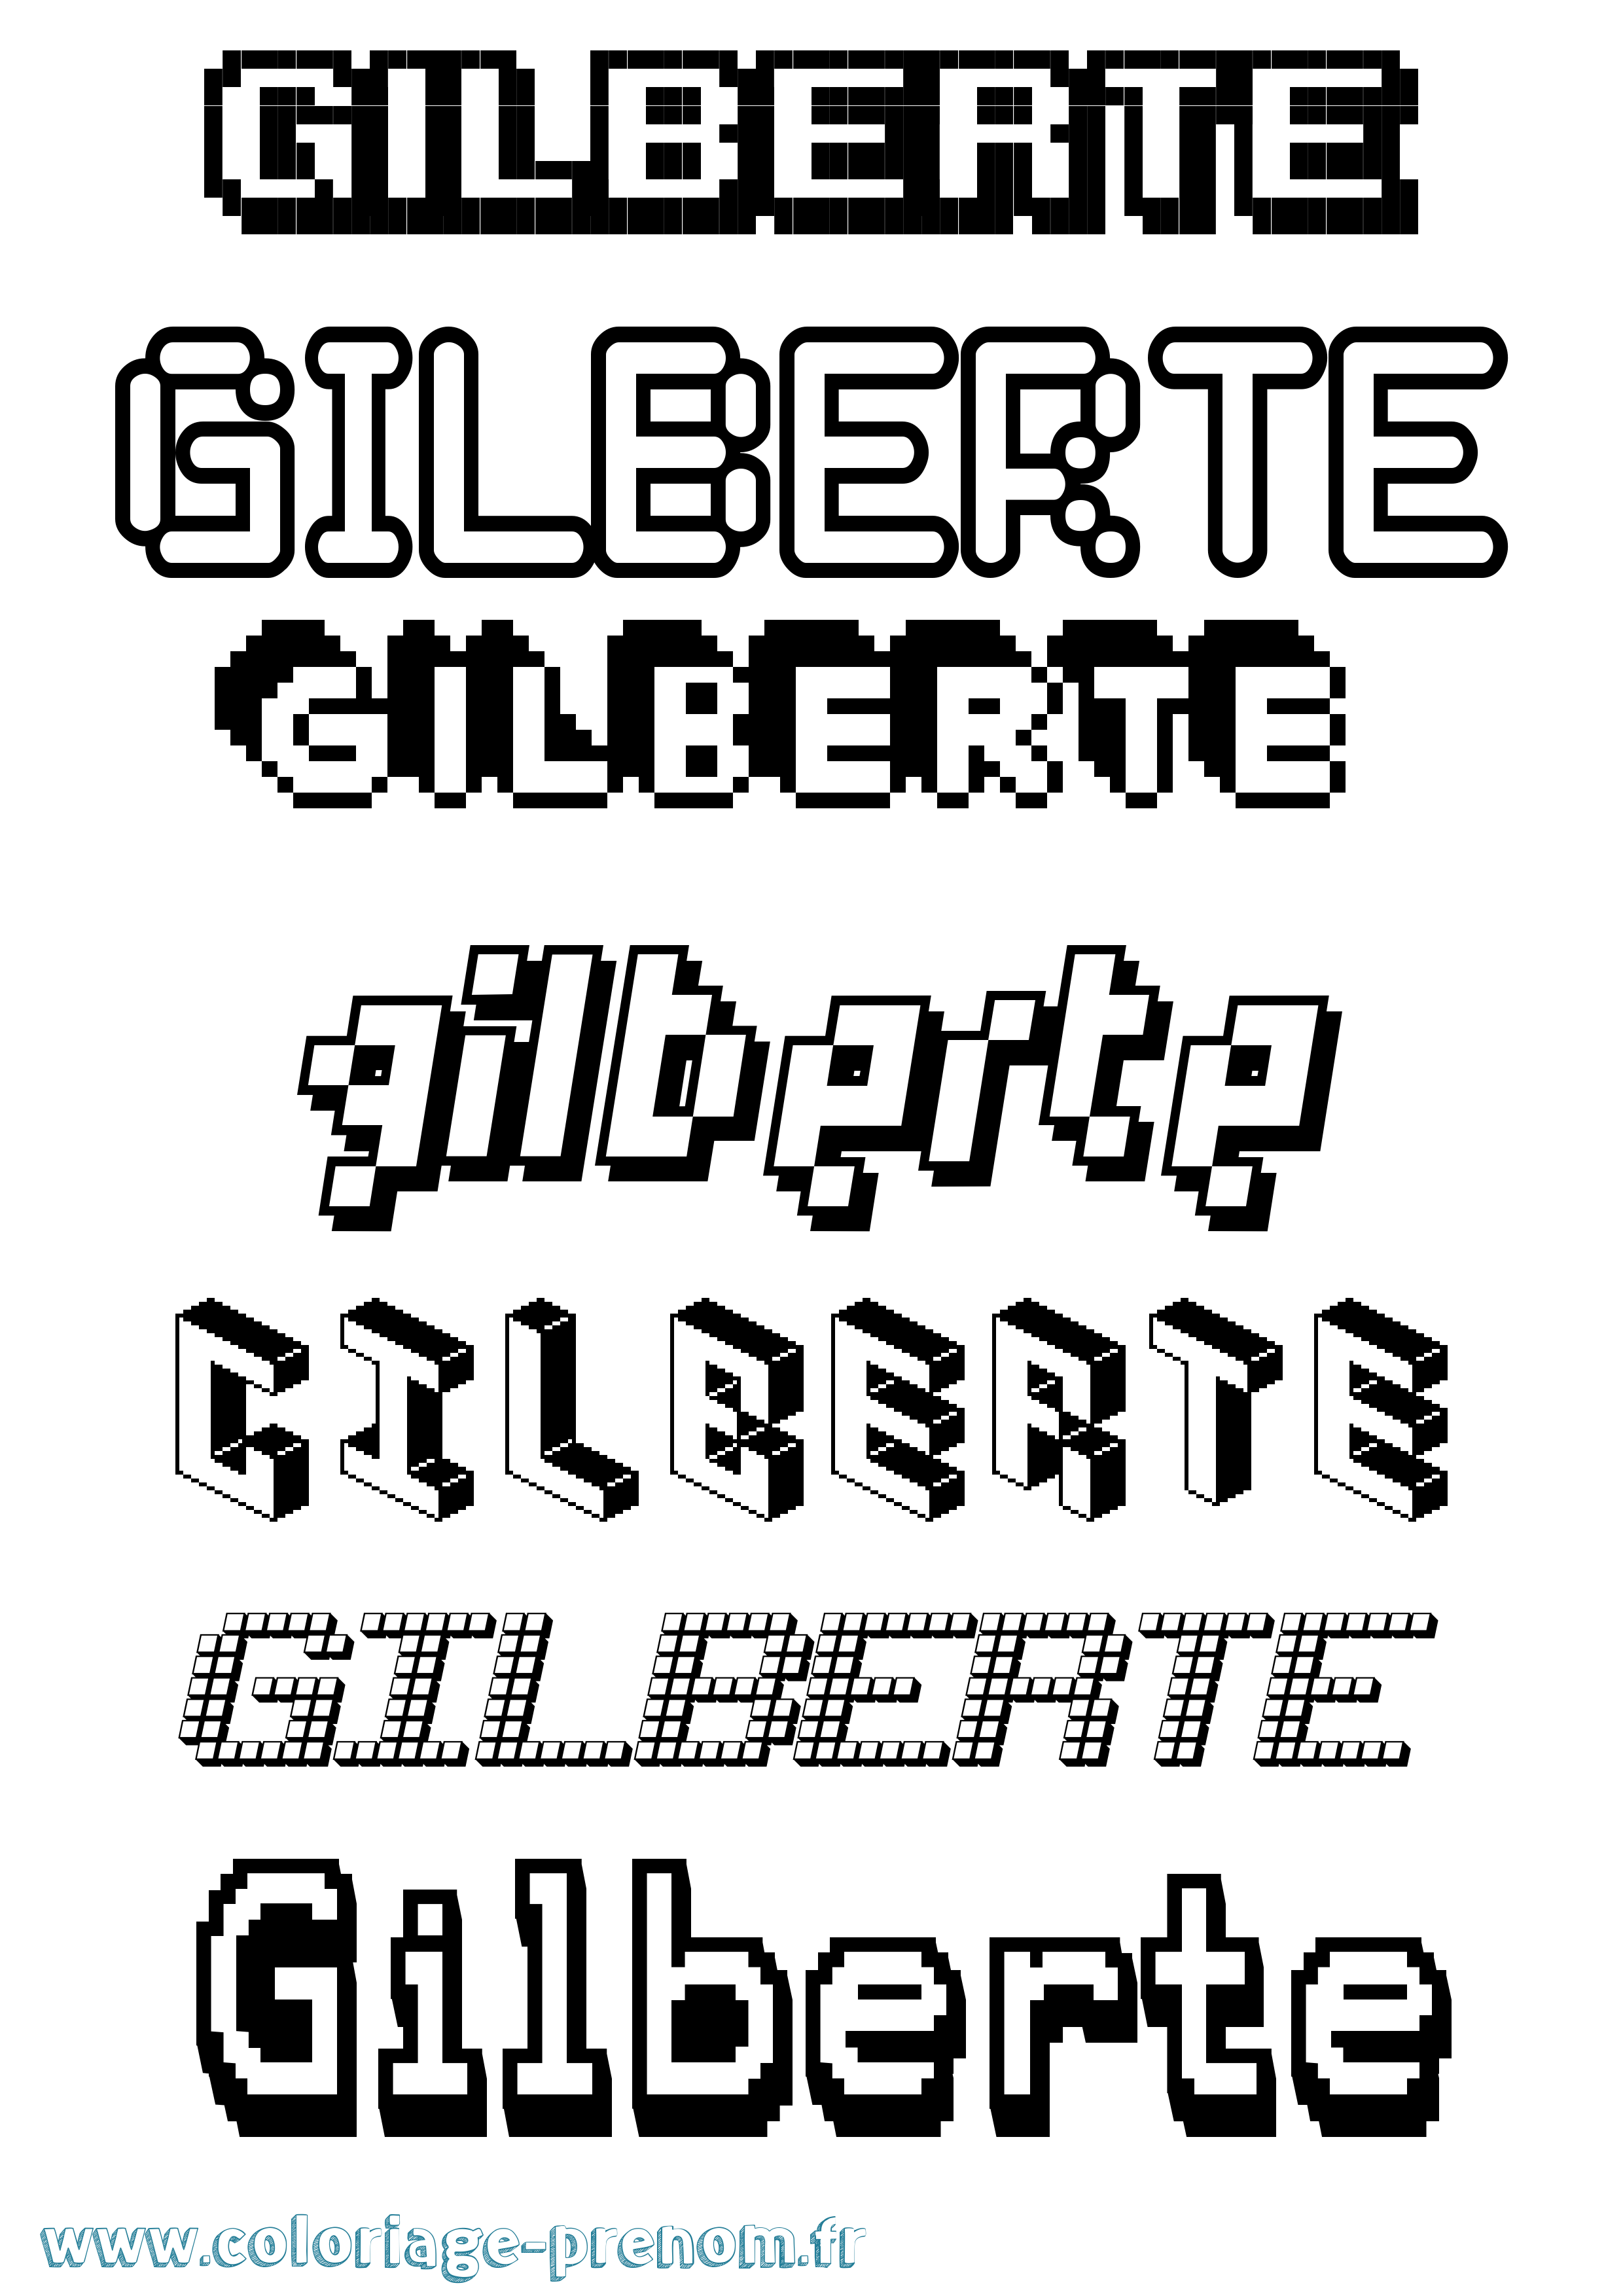 Coloriage prénom Gilberte Pixel